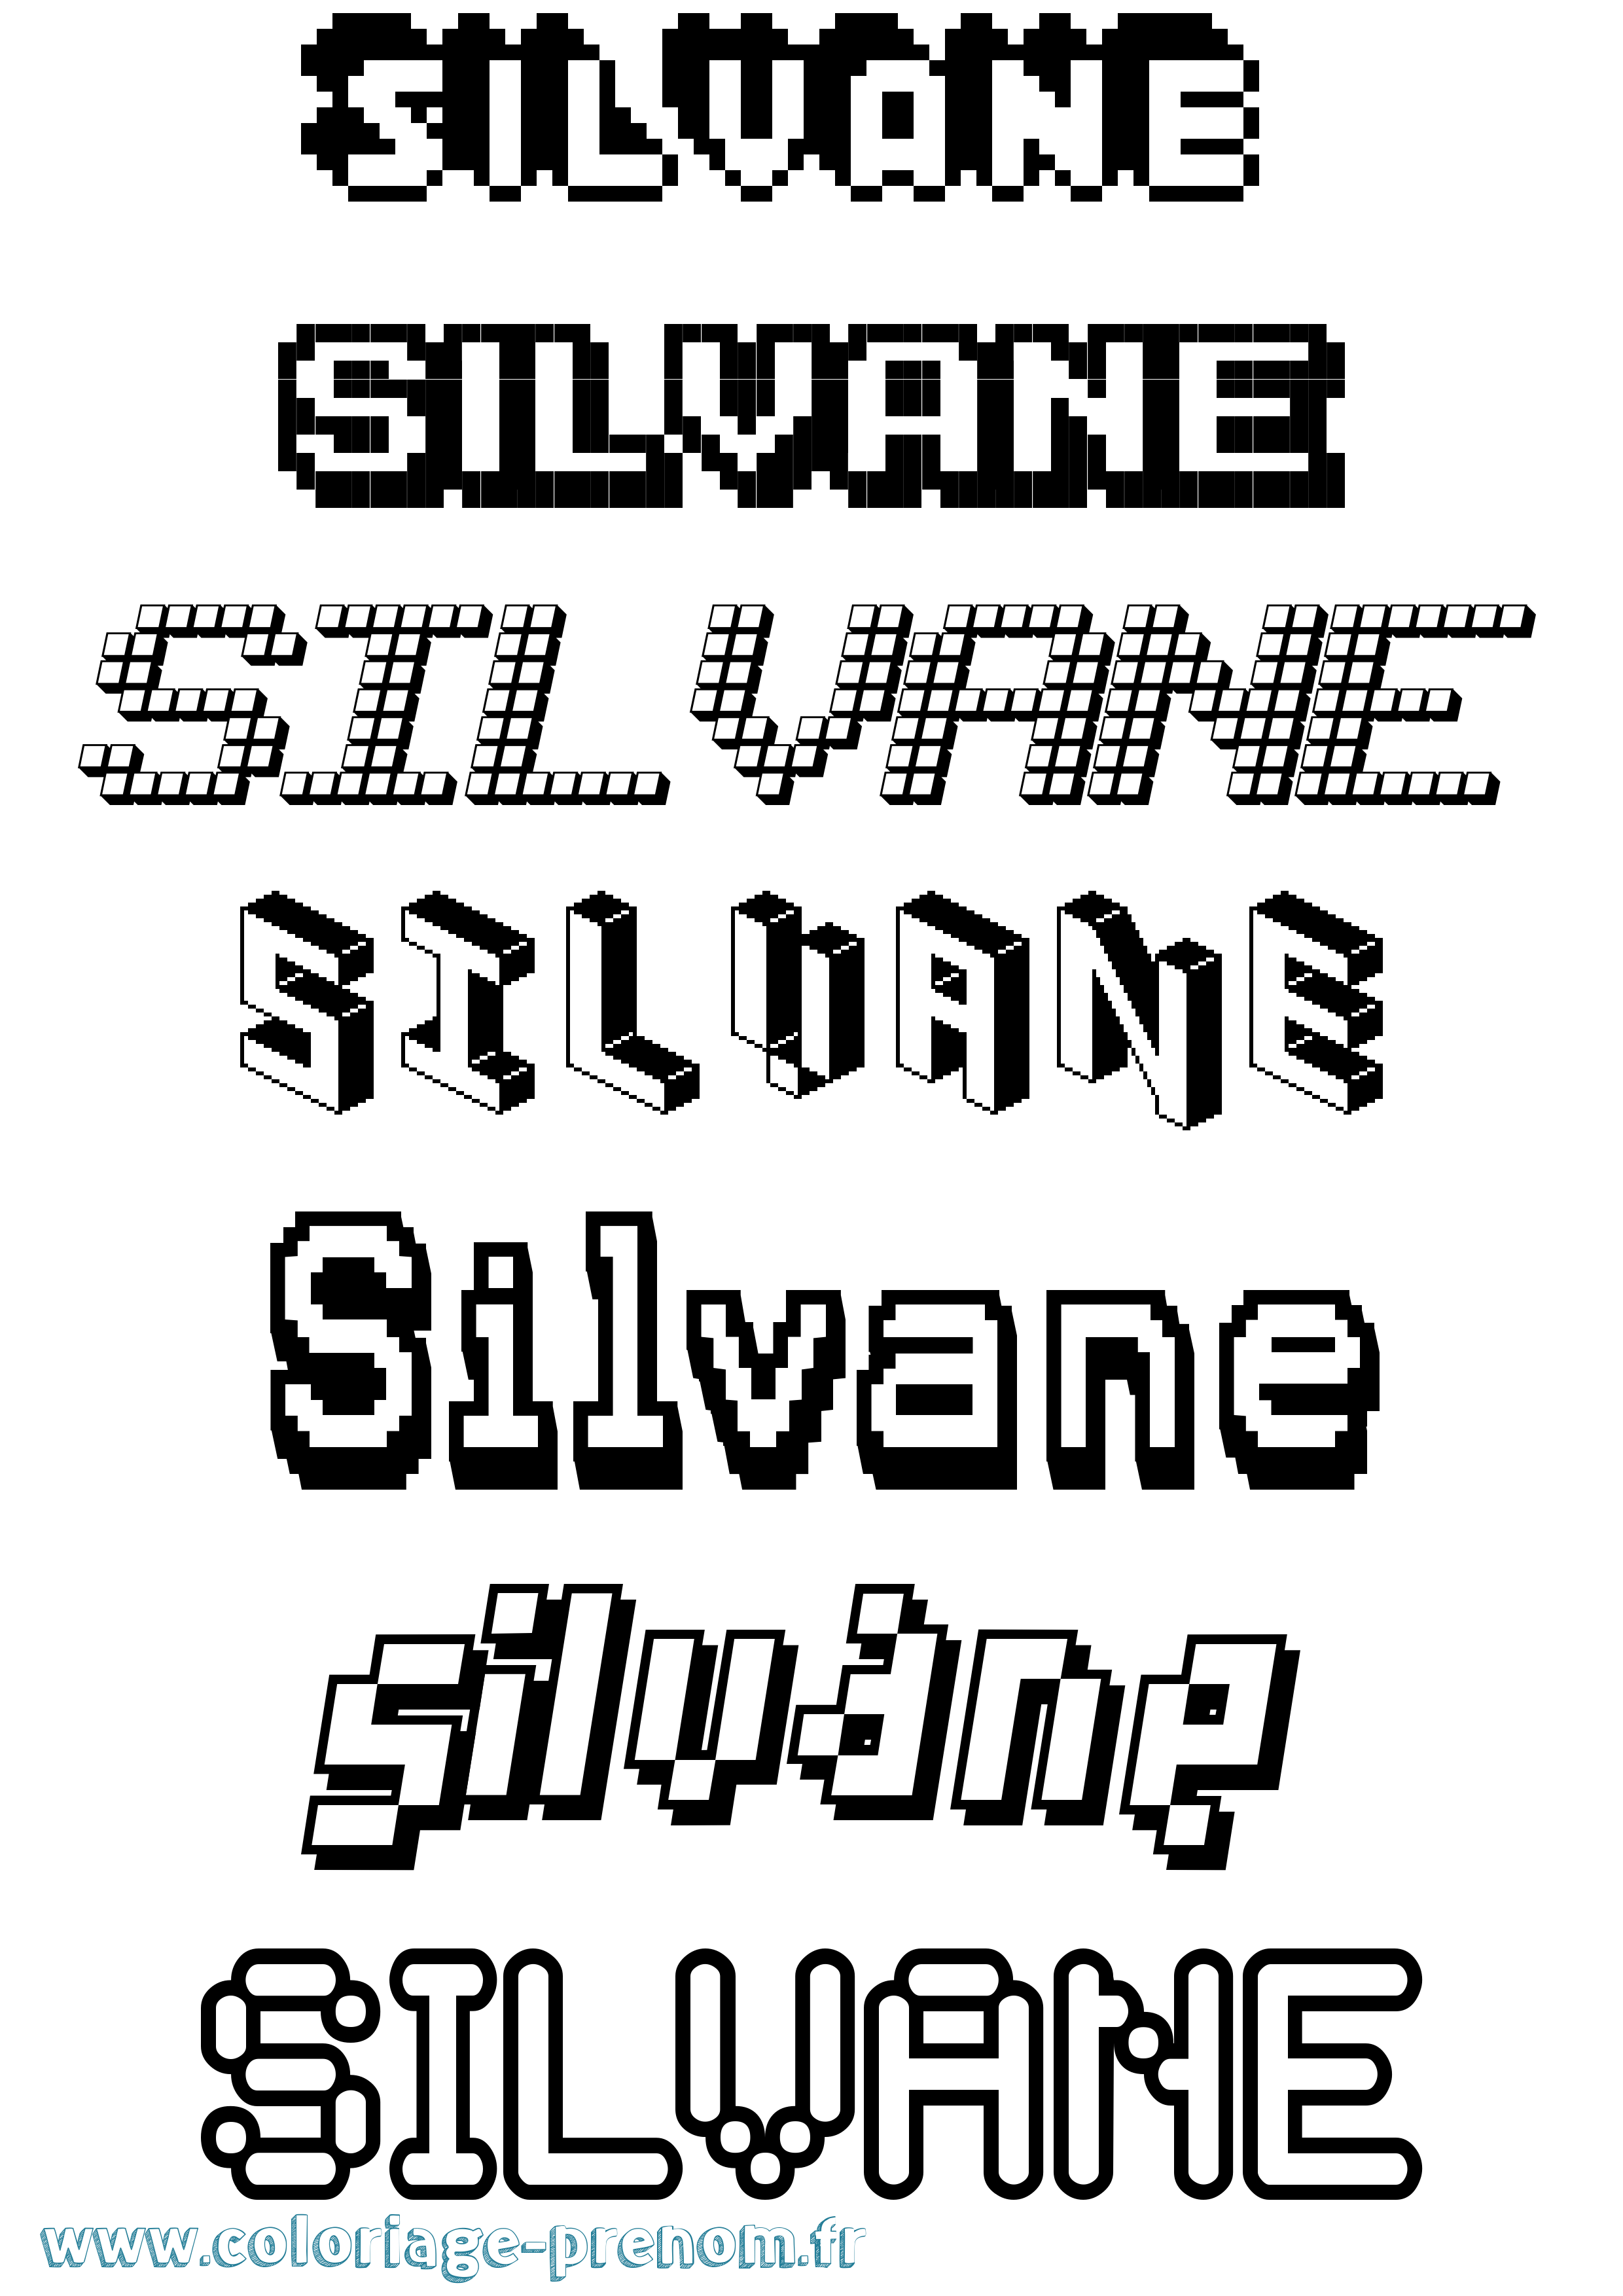 Coloriage prénom Silvane Pixel